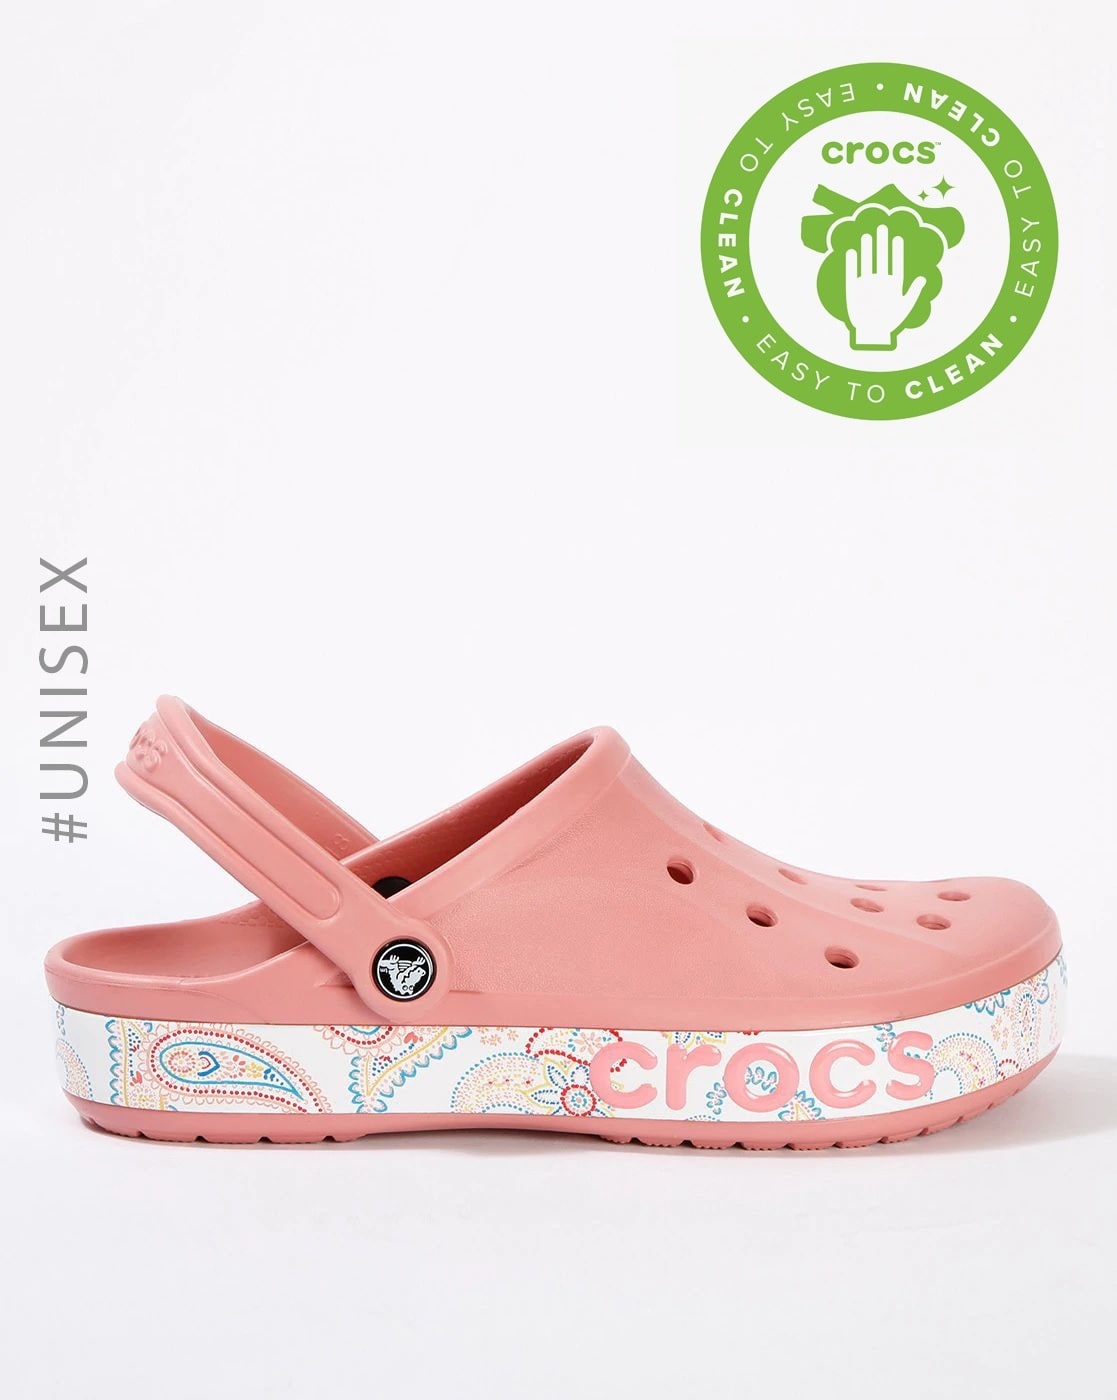 crocs for adults shoes